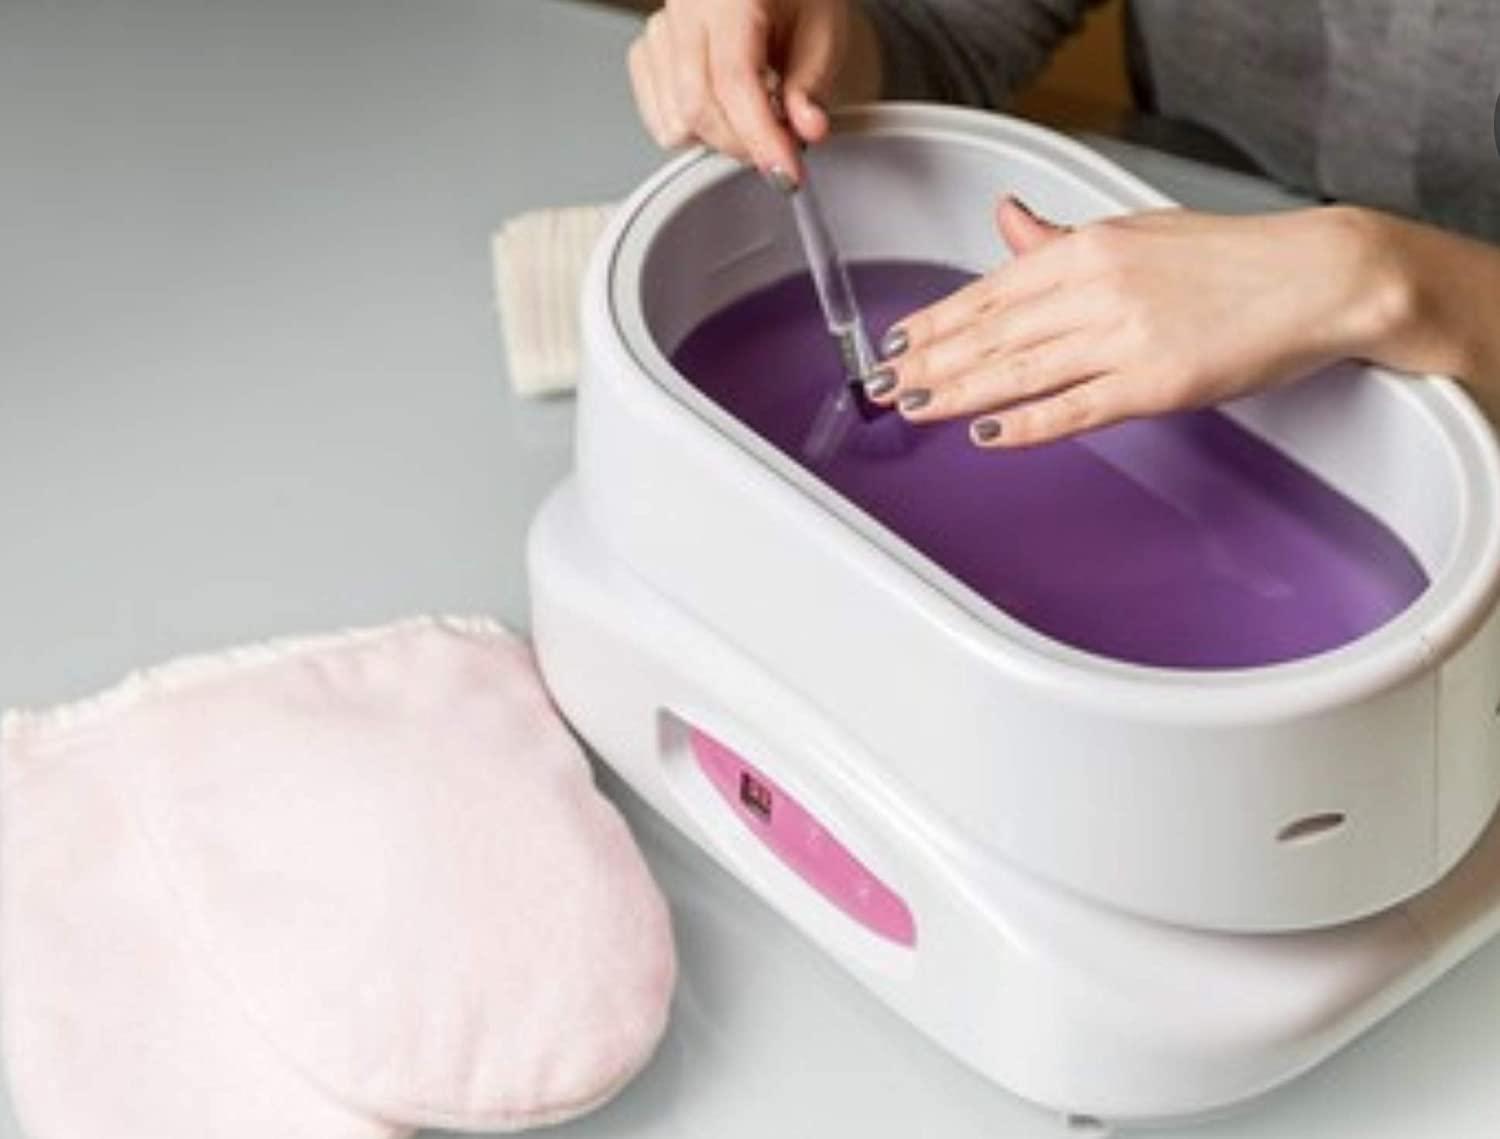 6LBS Paraffin Wax Refills Hands Feet Moisturizing Paraffin Bath Therapy  Lavender Wax for Hands Feet (Lavender)